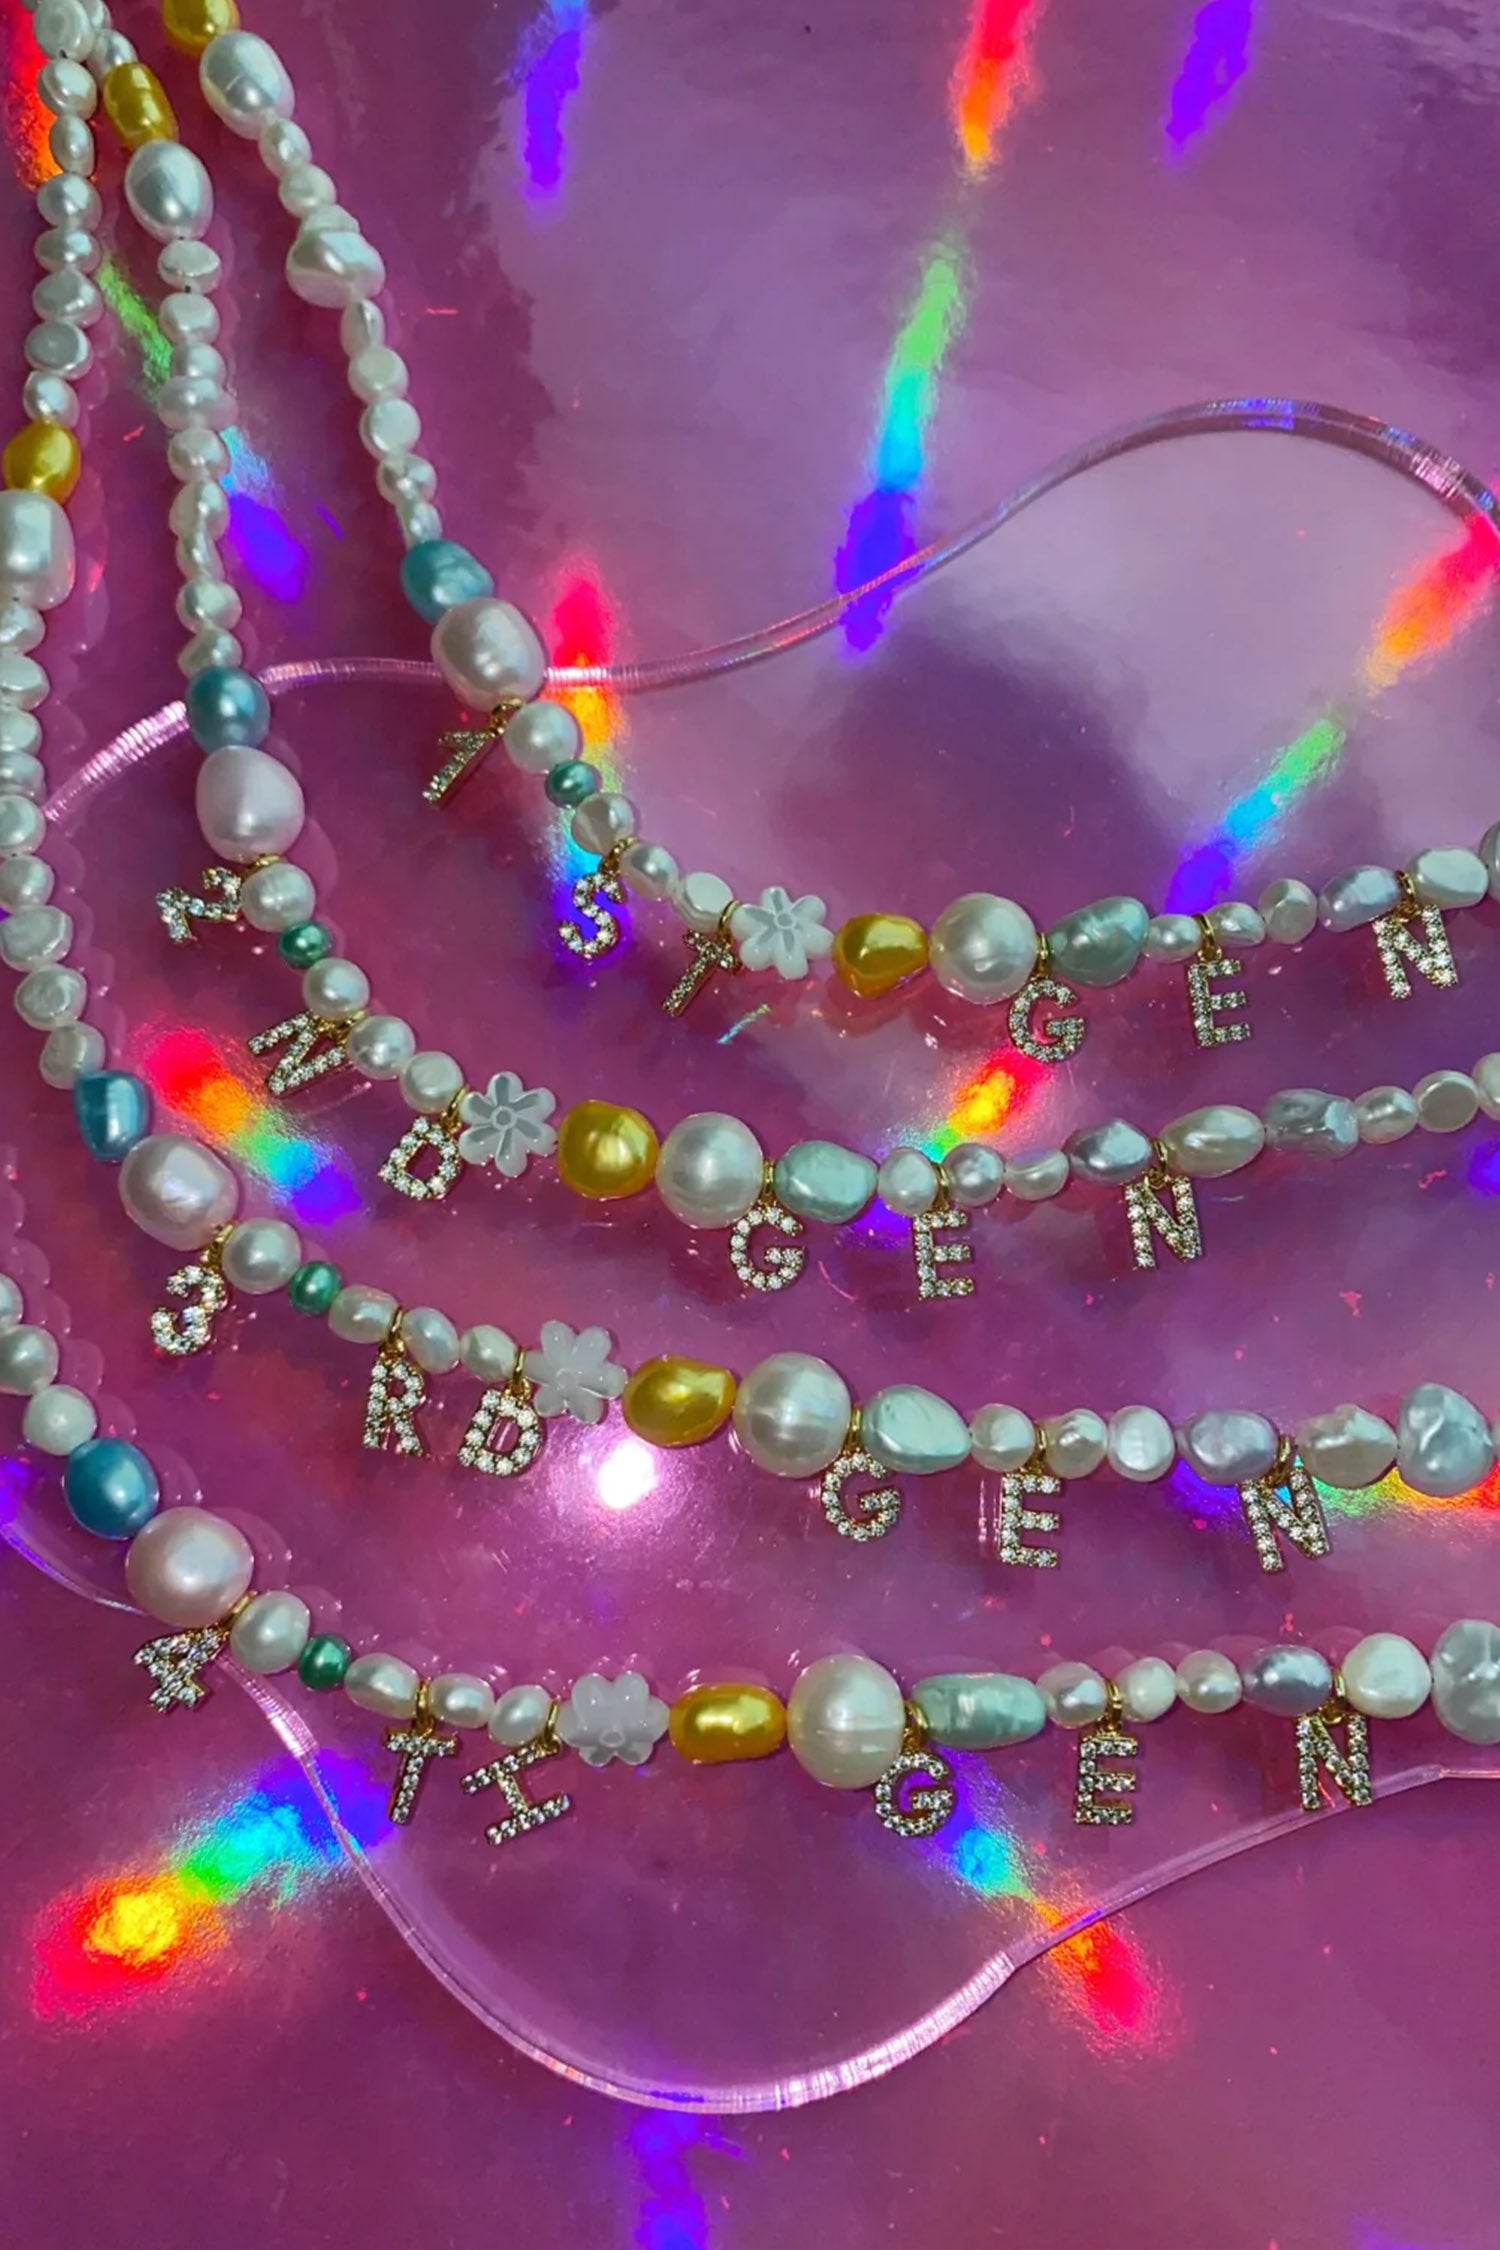 Suncatcher Beads - Shop on Pinterest